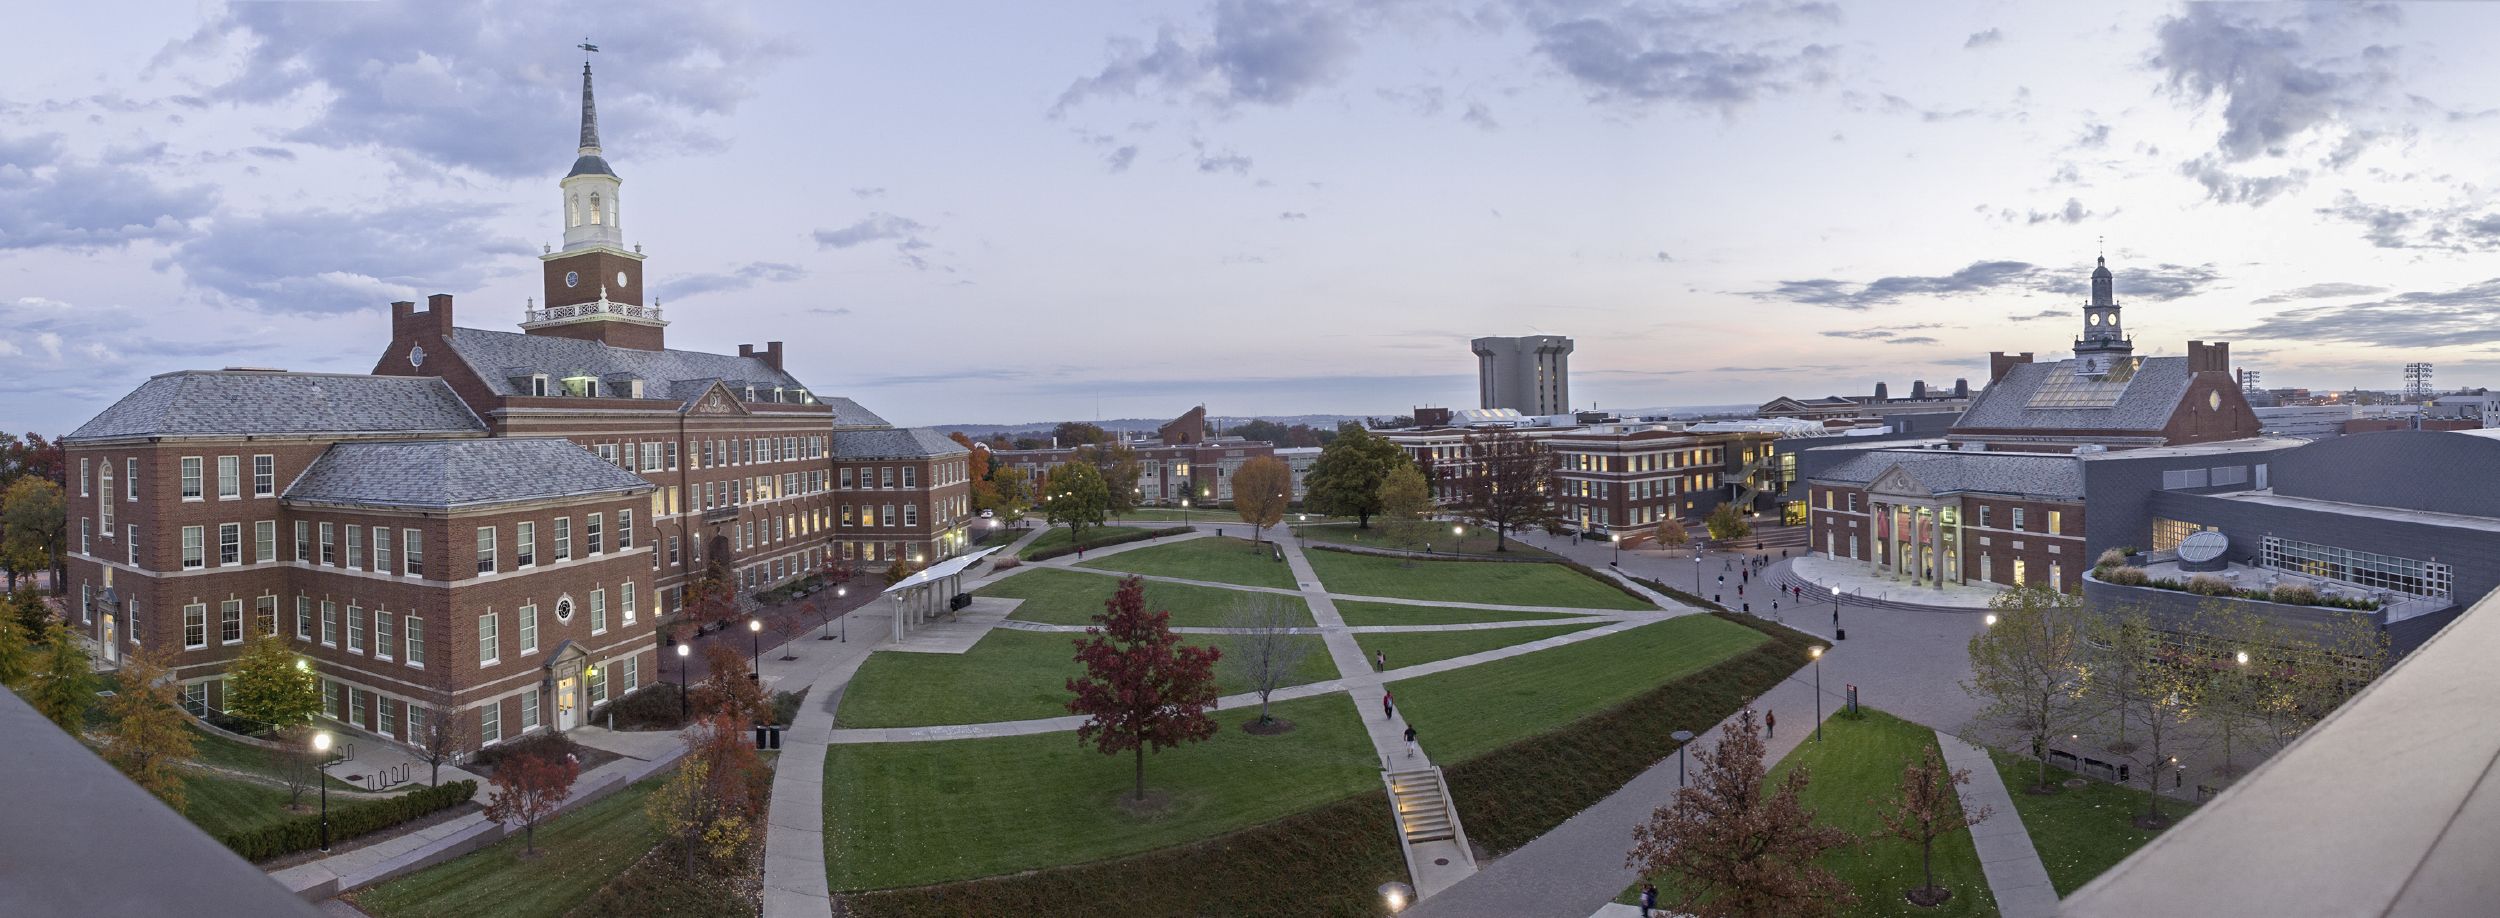 University of Cincinnati Commons